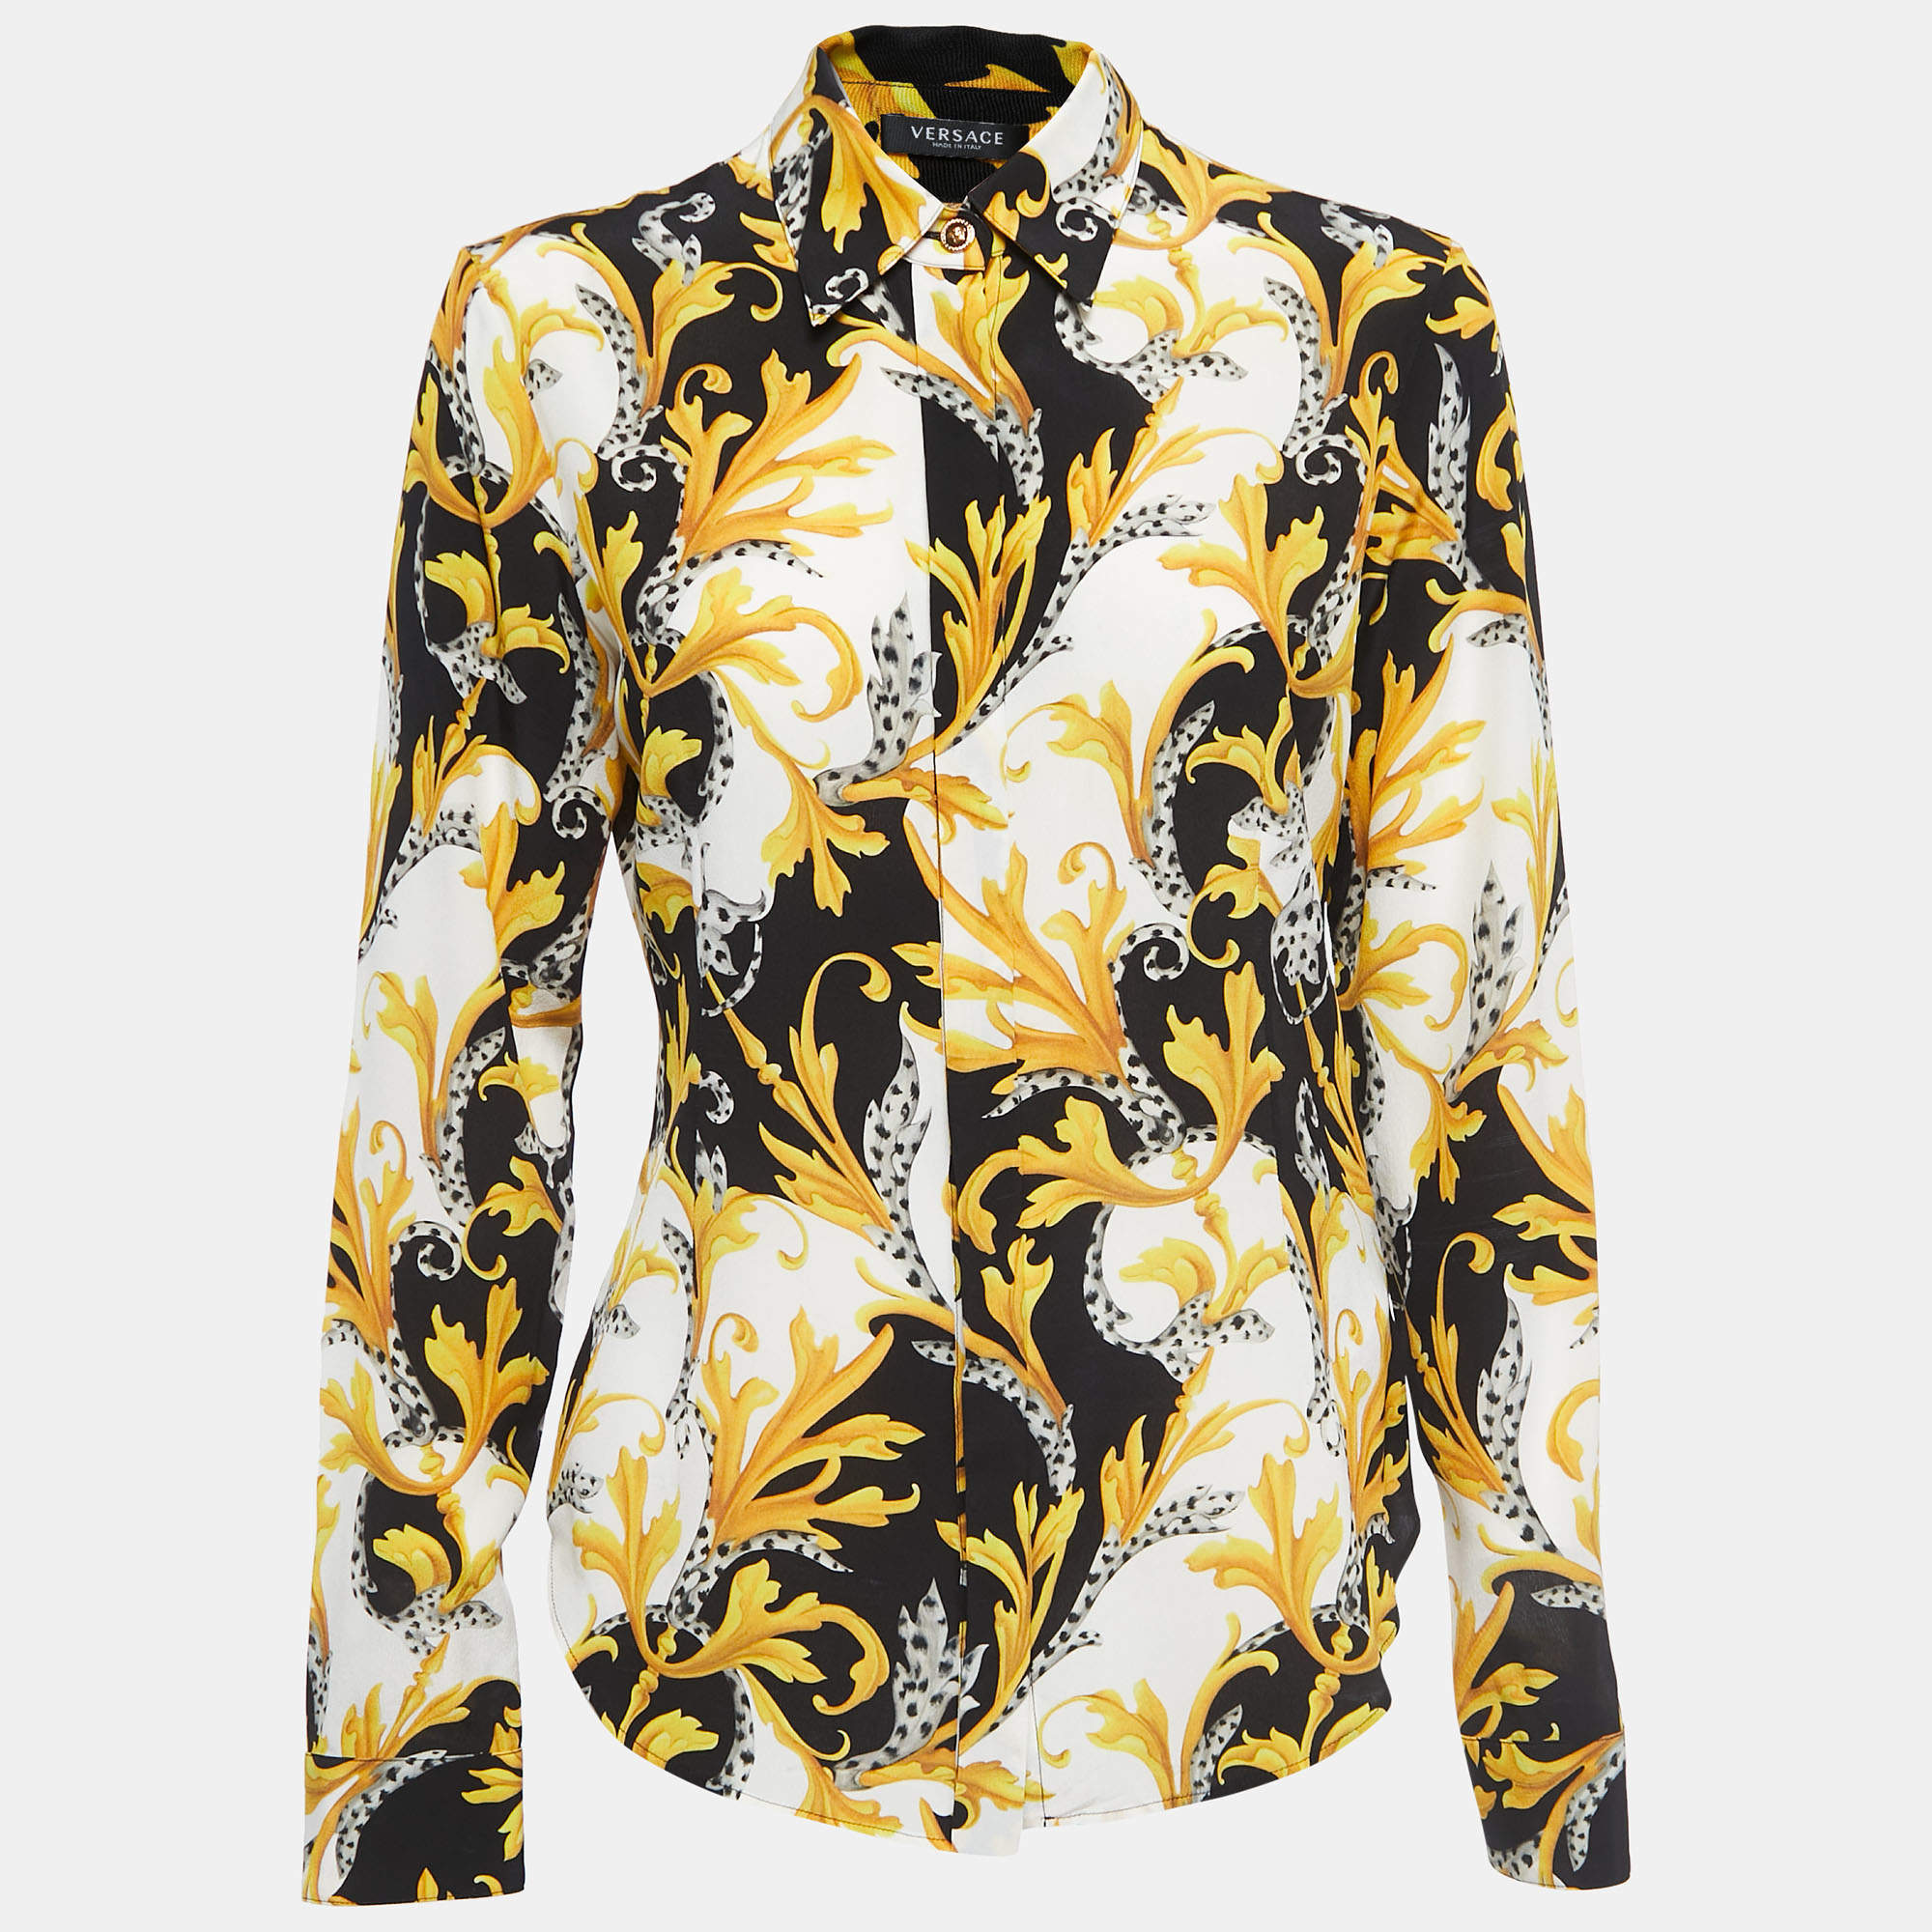 Versace Black/Gold Baroque Printed Silk Shirt S Versace